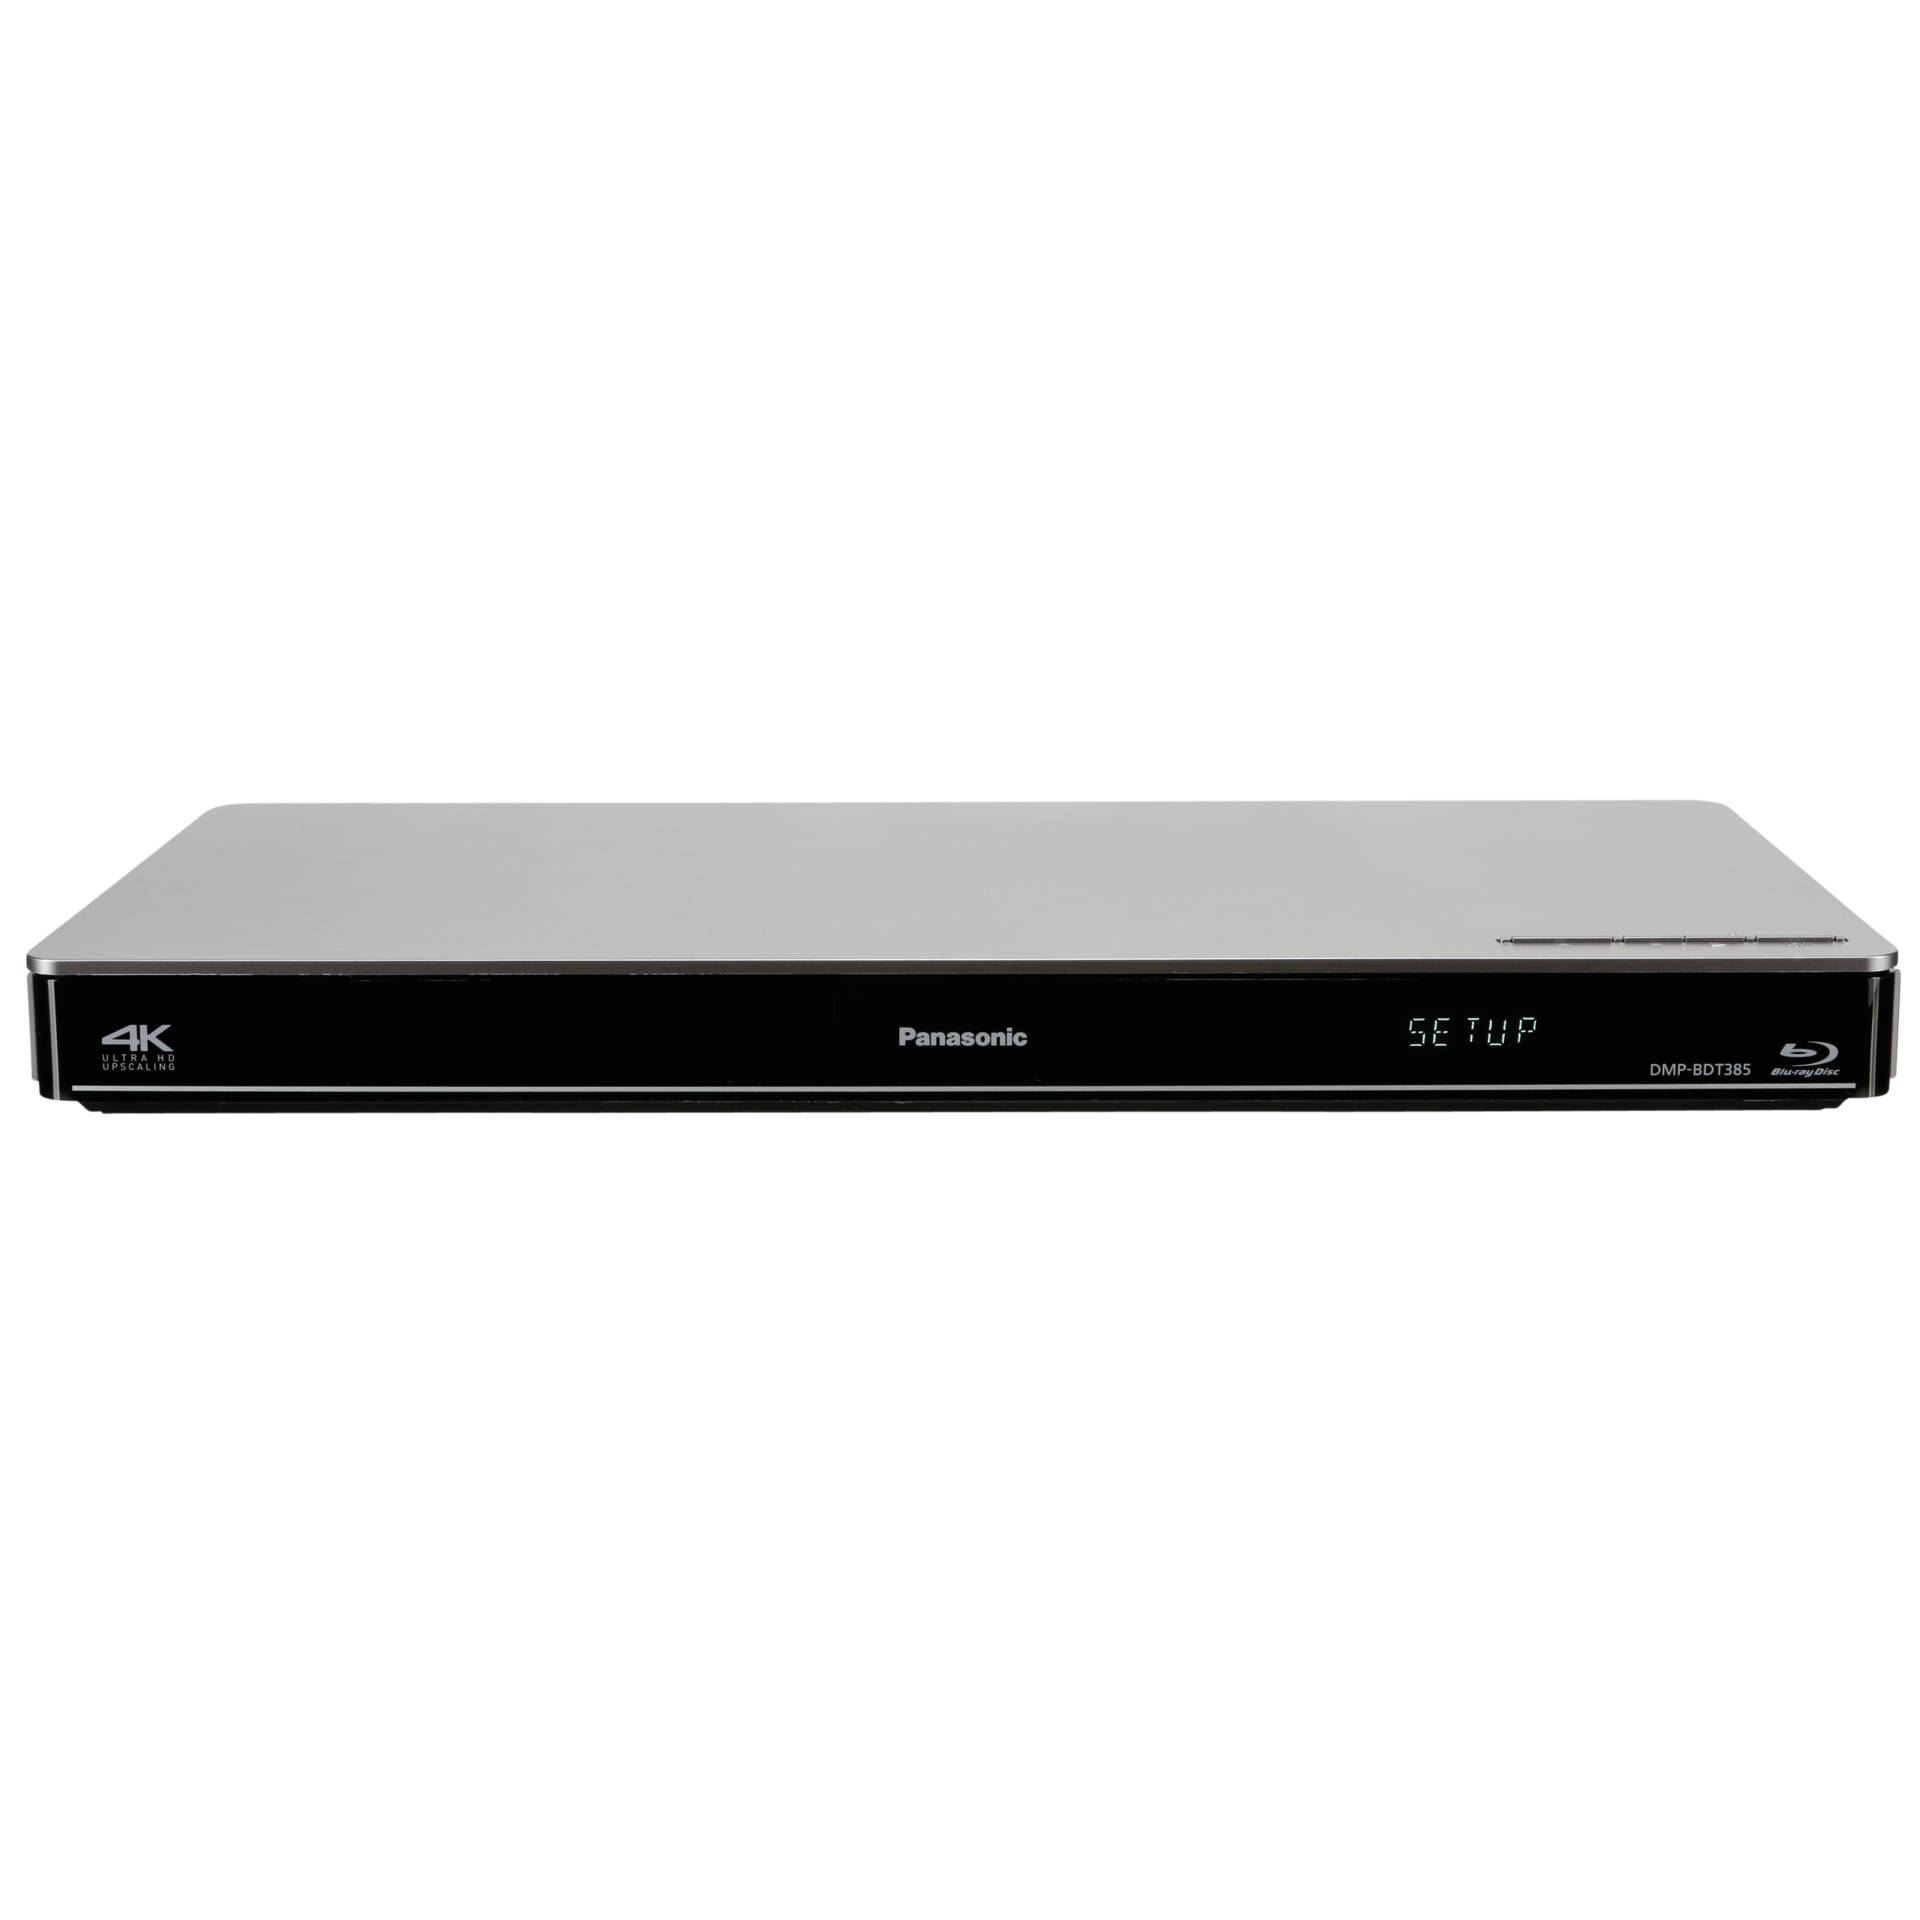 Panasonic -DMP-BDT385 -Hochskalierung -Panasonic Blu-ray-Disk-Player Hardware/Electronic -3D Ethernet -Wi-Fi (DMPBDT385EG)